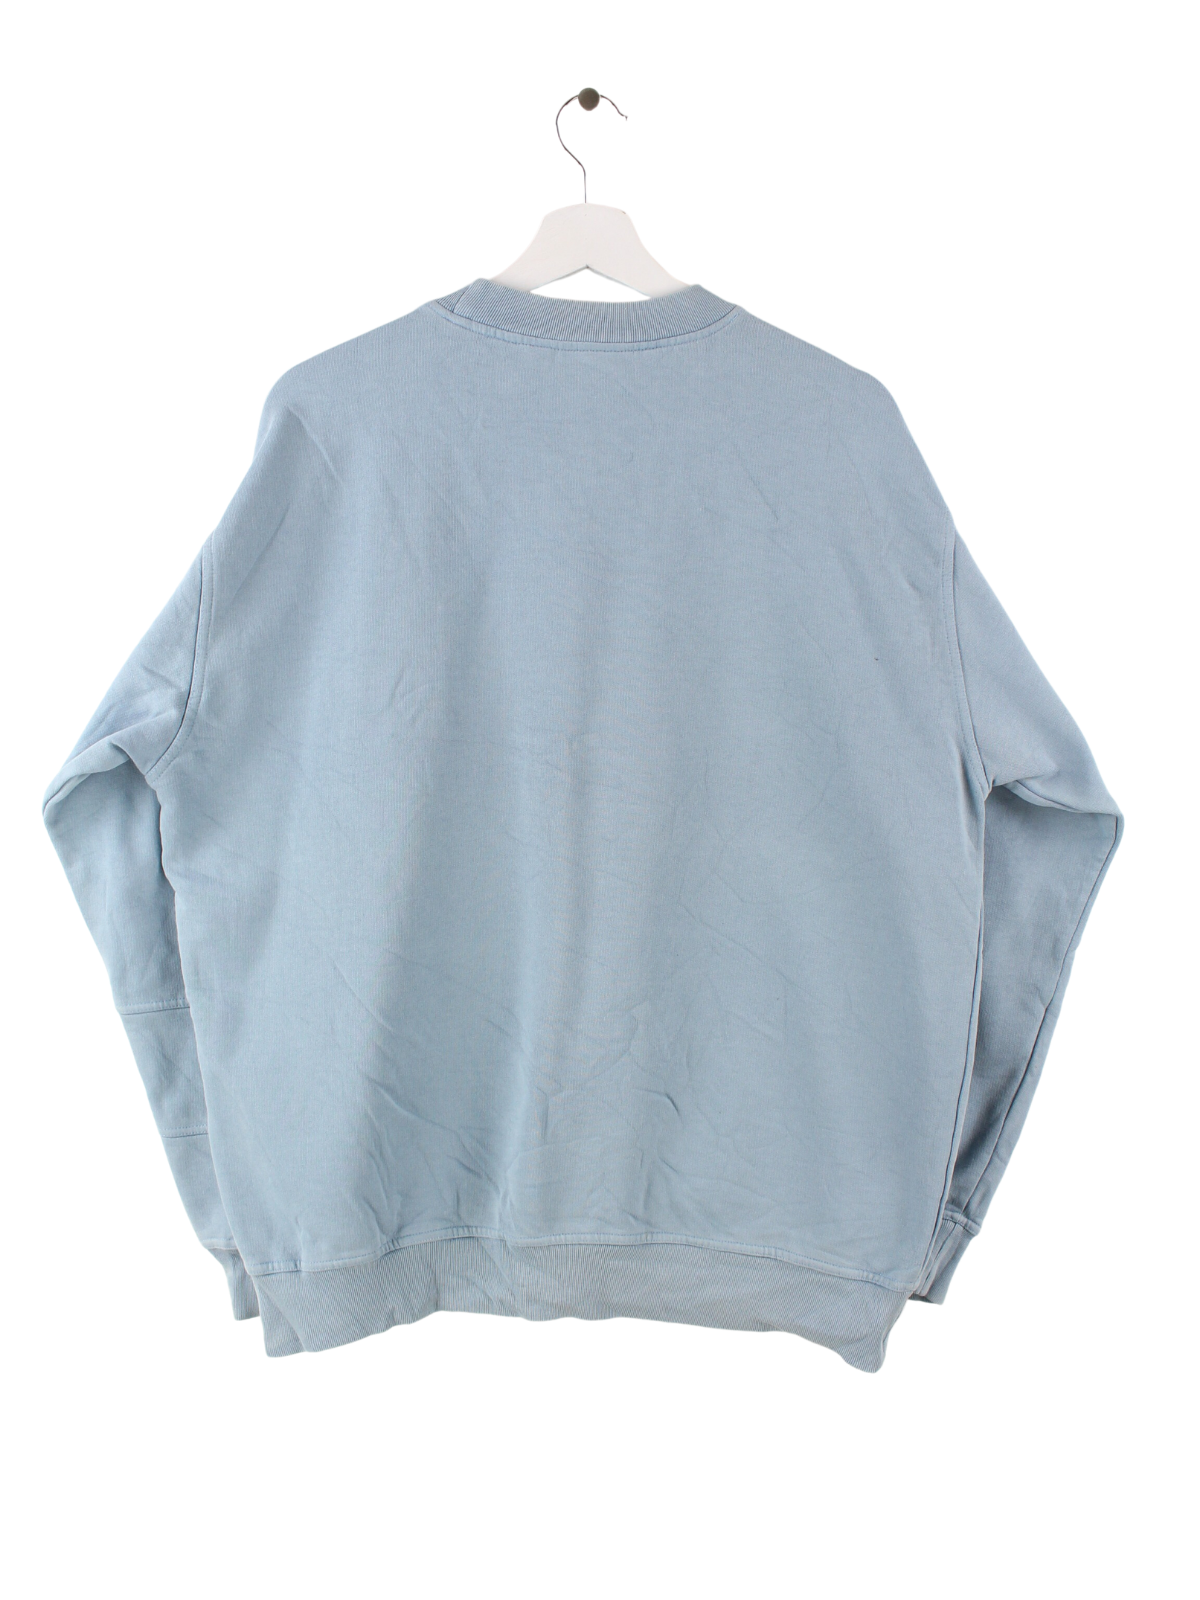 Ellesse Embroidered Sweater Blau XL